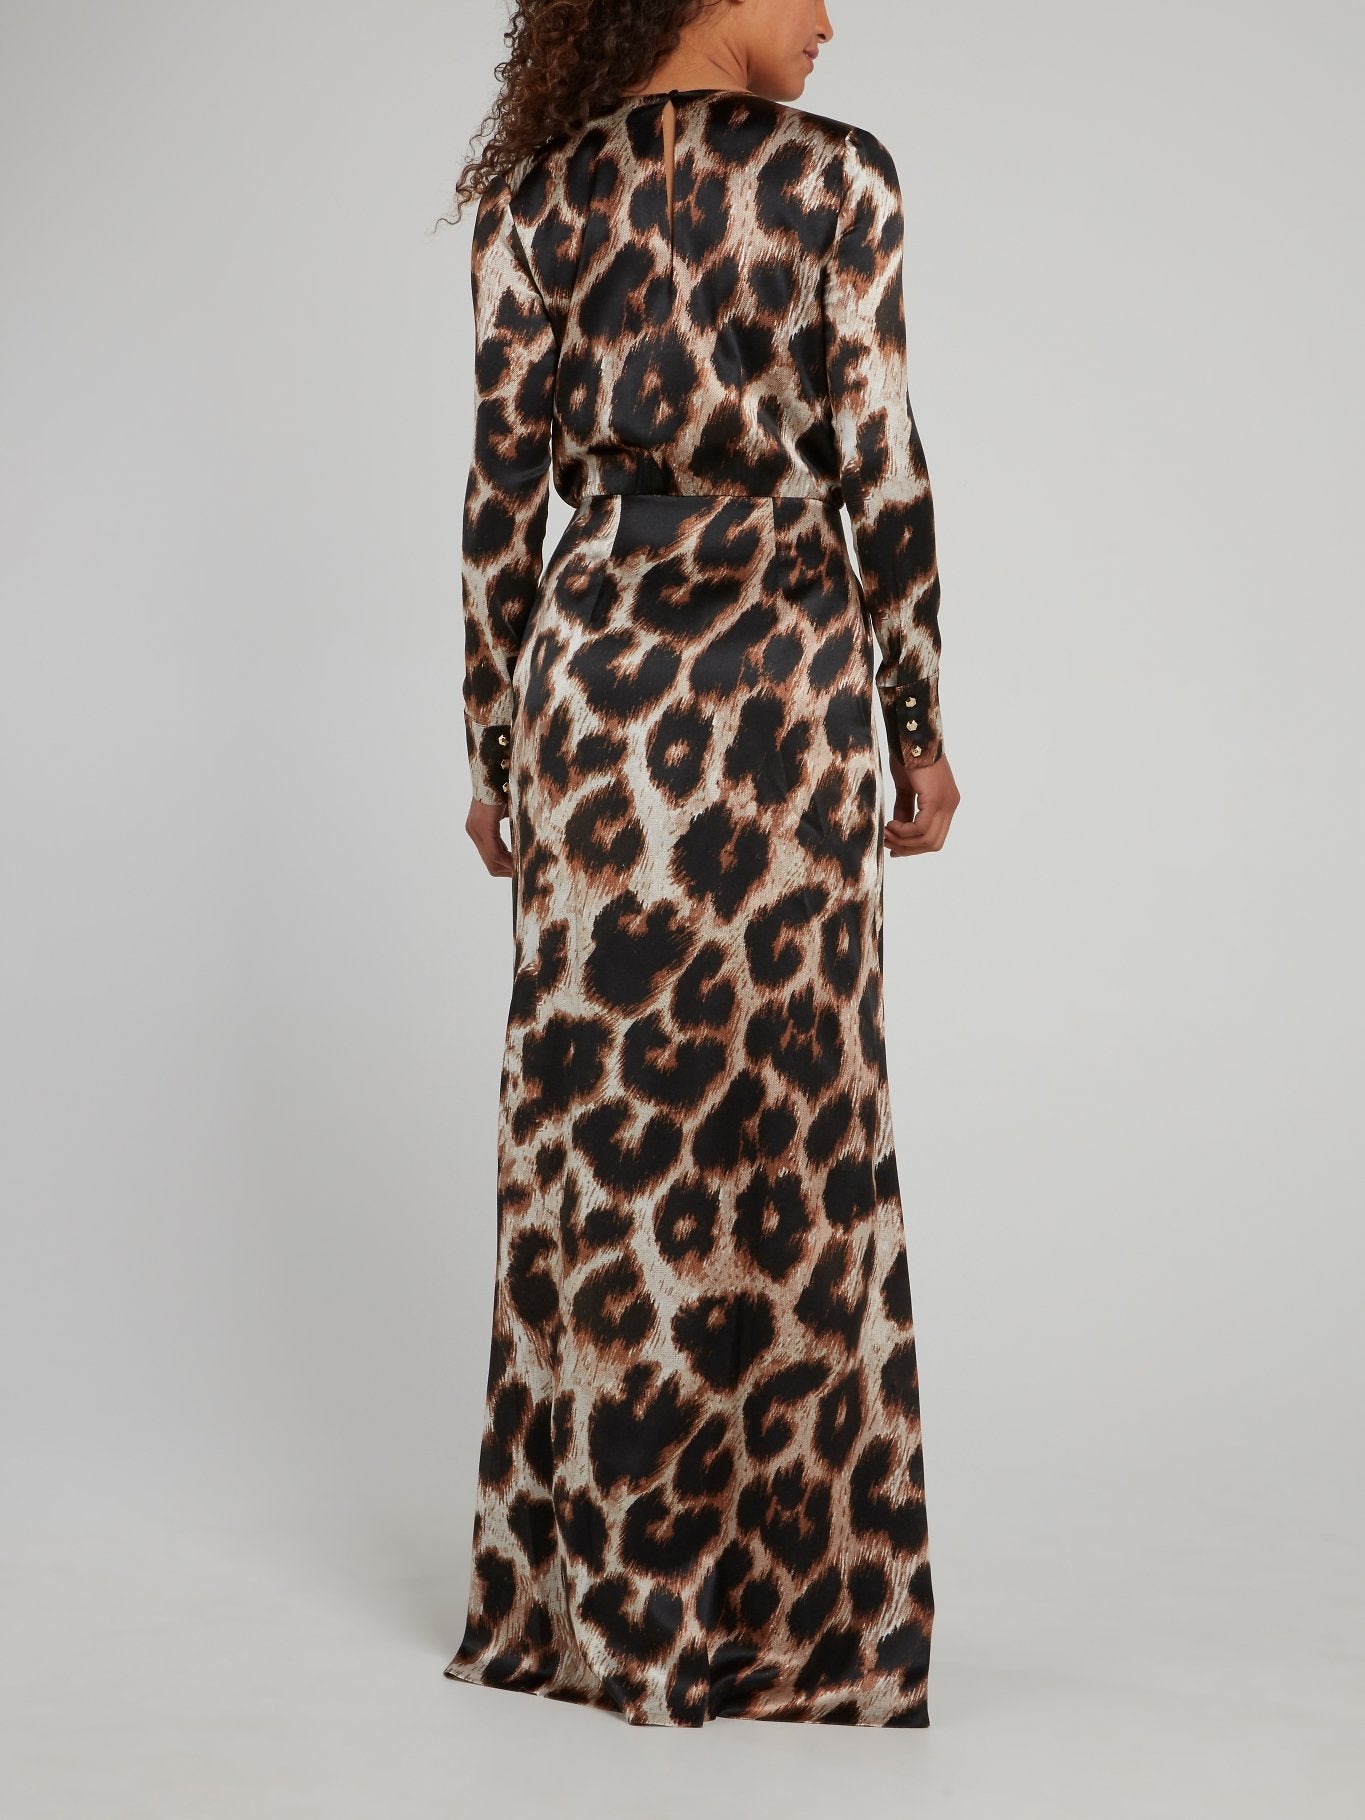 Leopard Print Surplice Maculate Maxi Dress